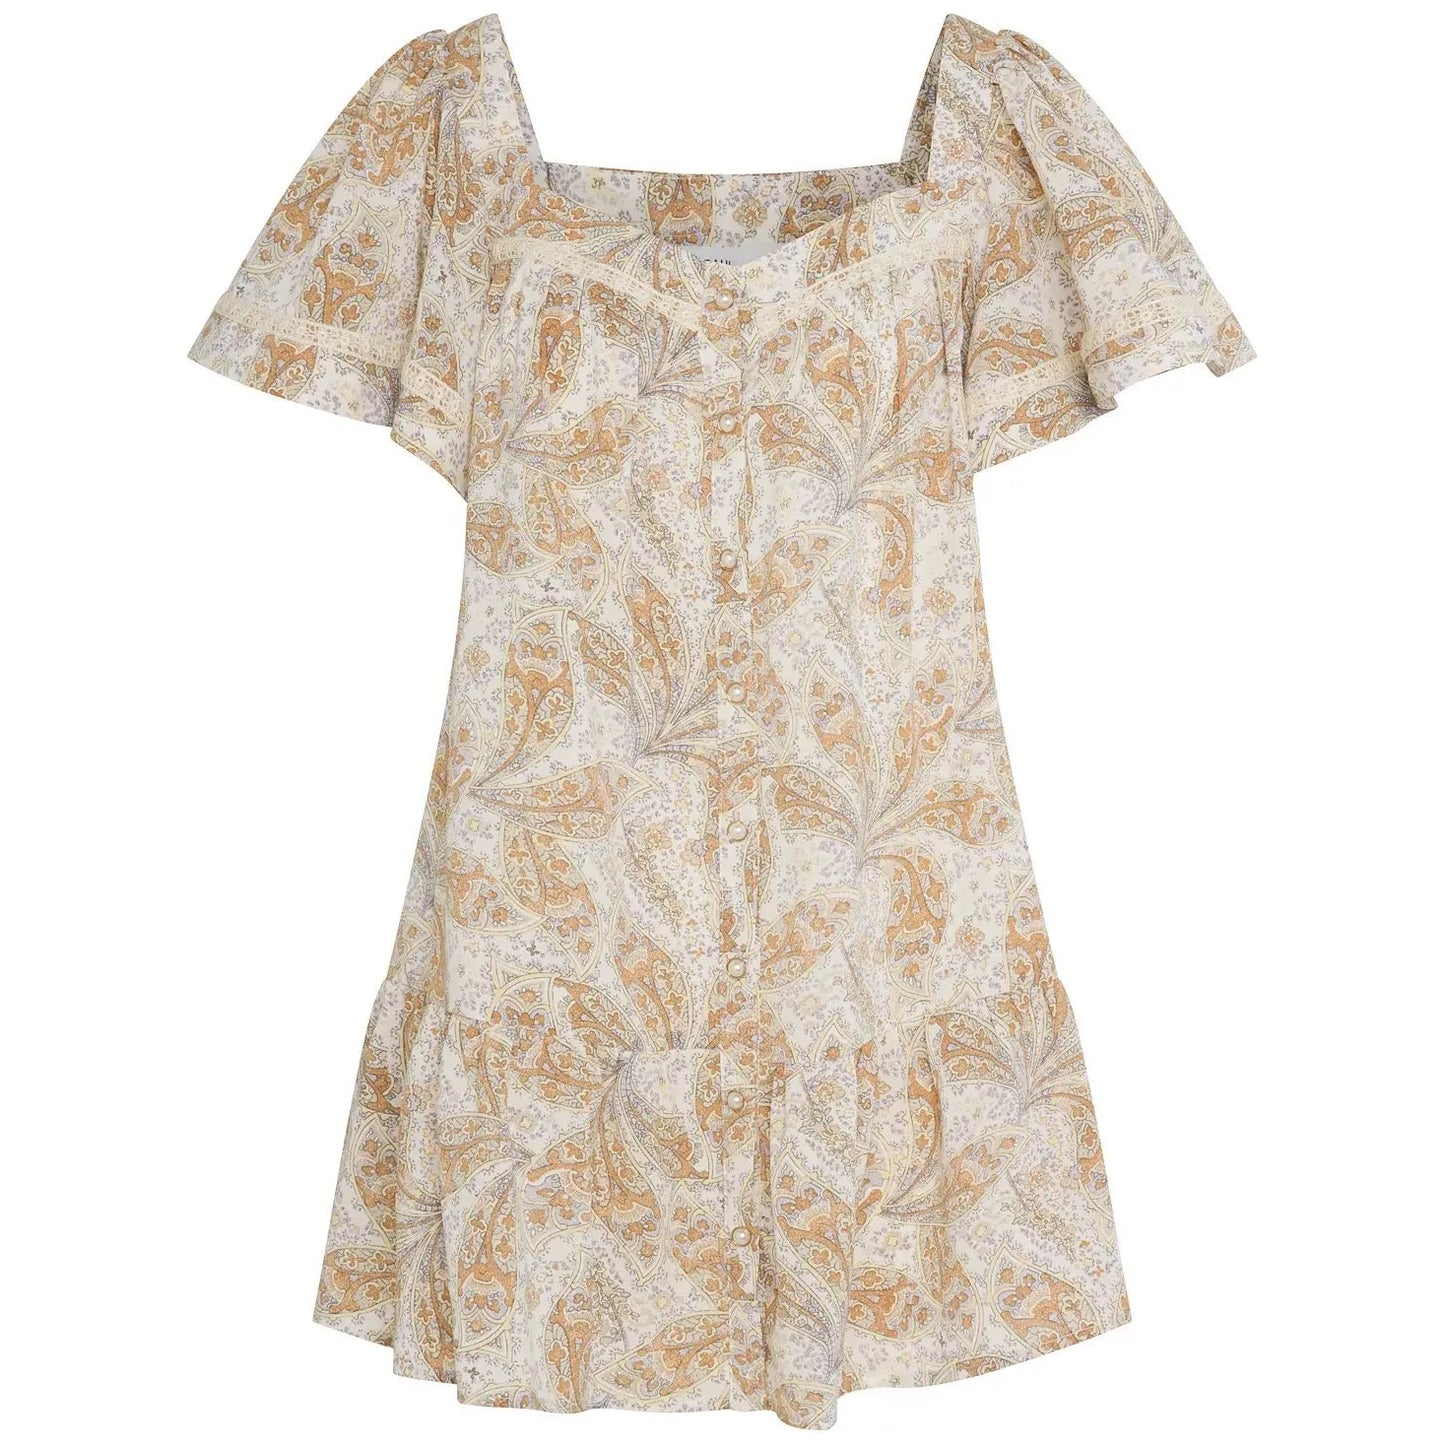 RAHI-RAHI Printed Lace-Trim Dress, Multi, Size: M - Brandat Outlet